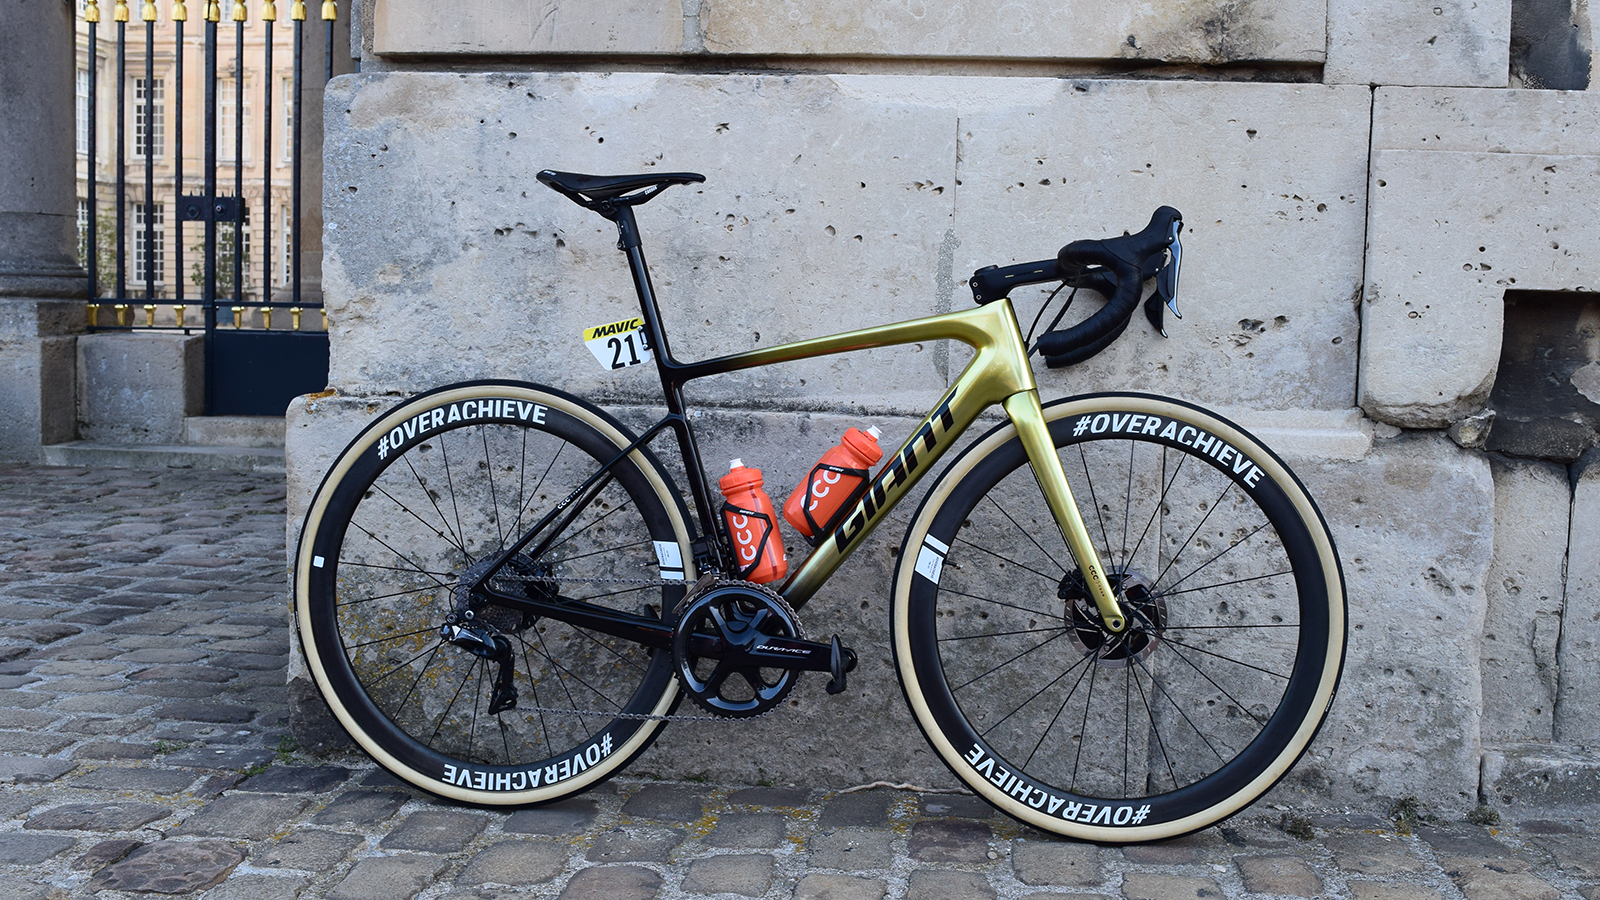 Paris-Roubaix Giant Defy – Gallery 